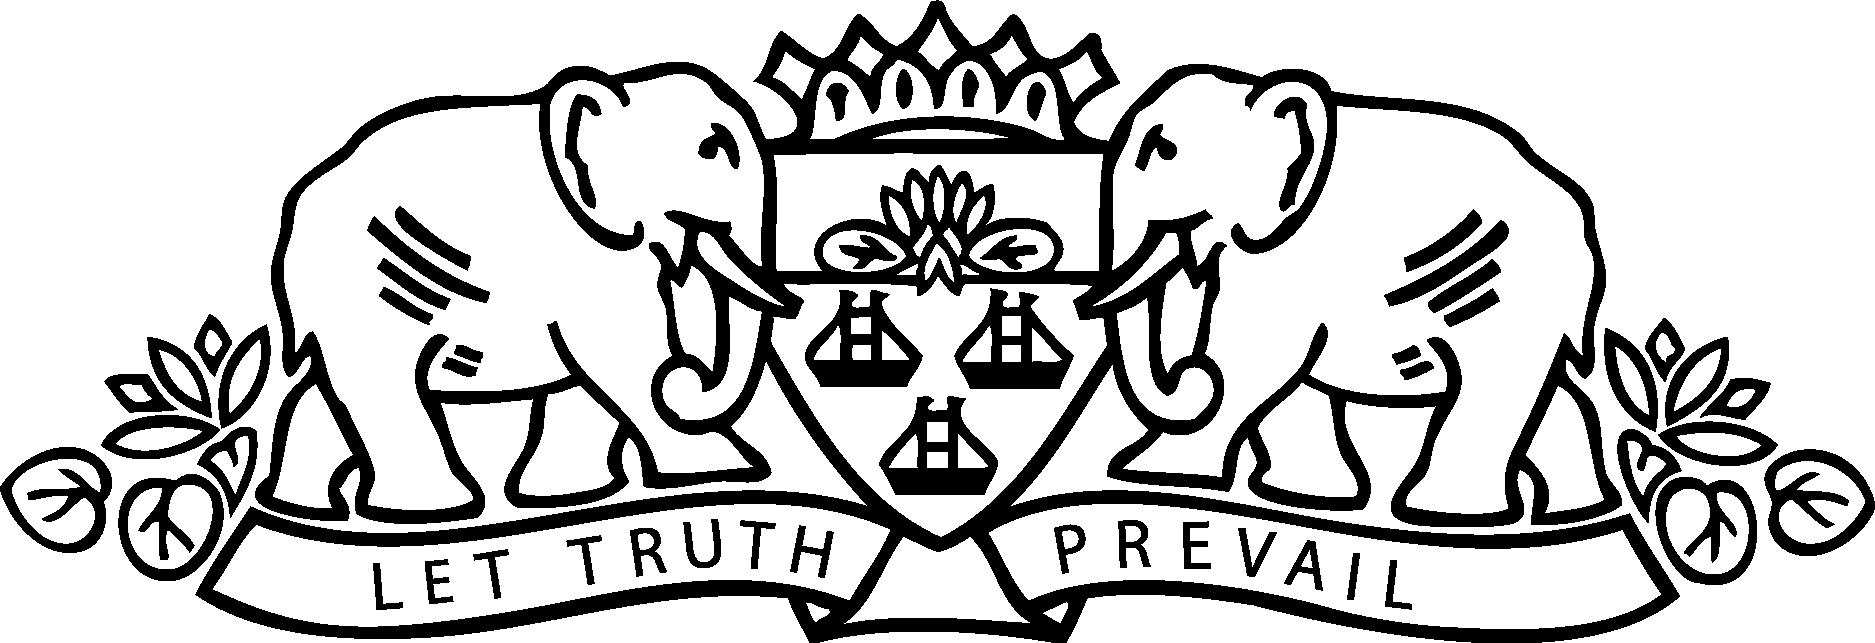 File:TOI TOI & DIXI Sanitärsysteme logo.svg - Wikimedia Commons